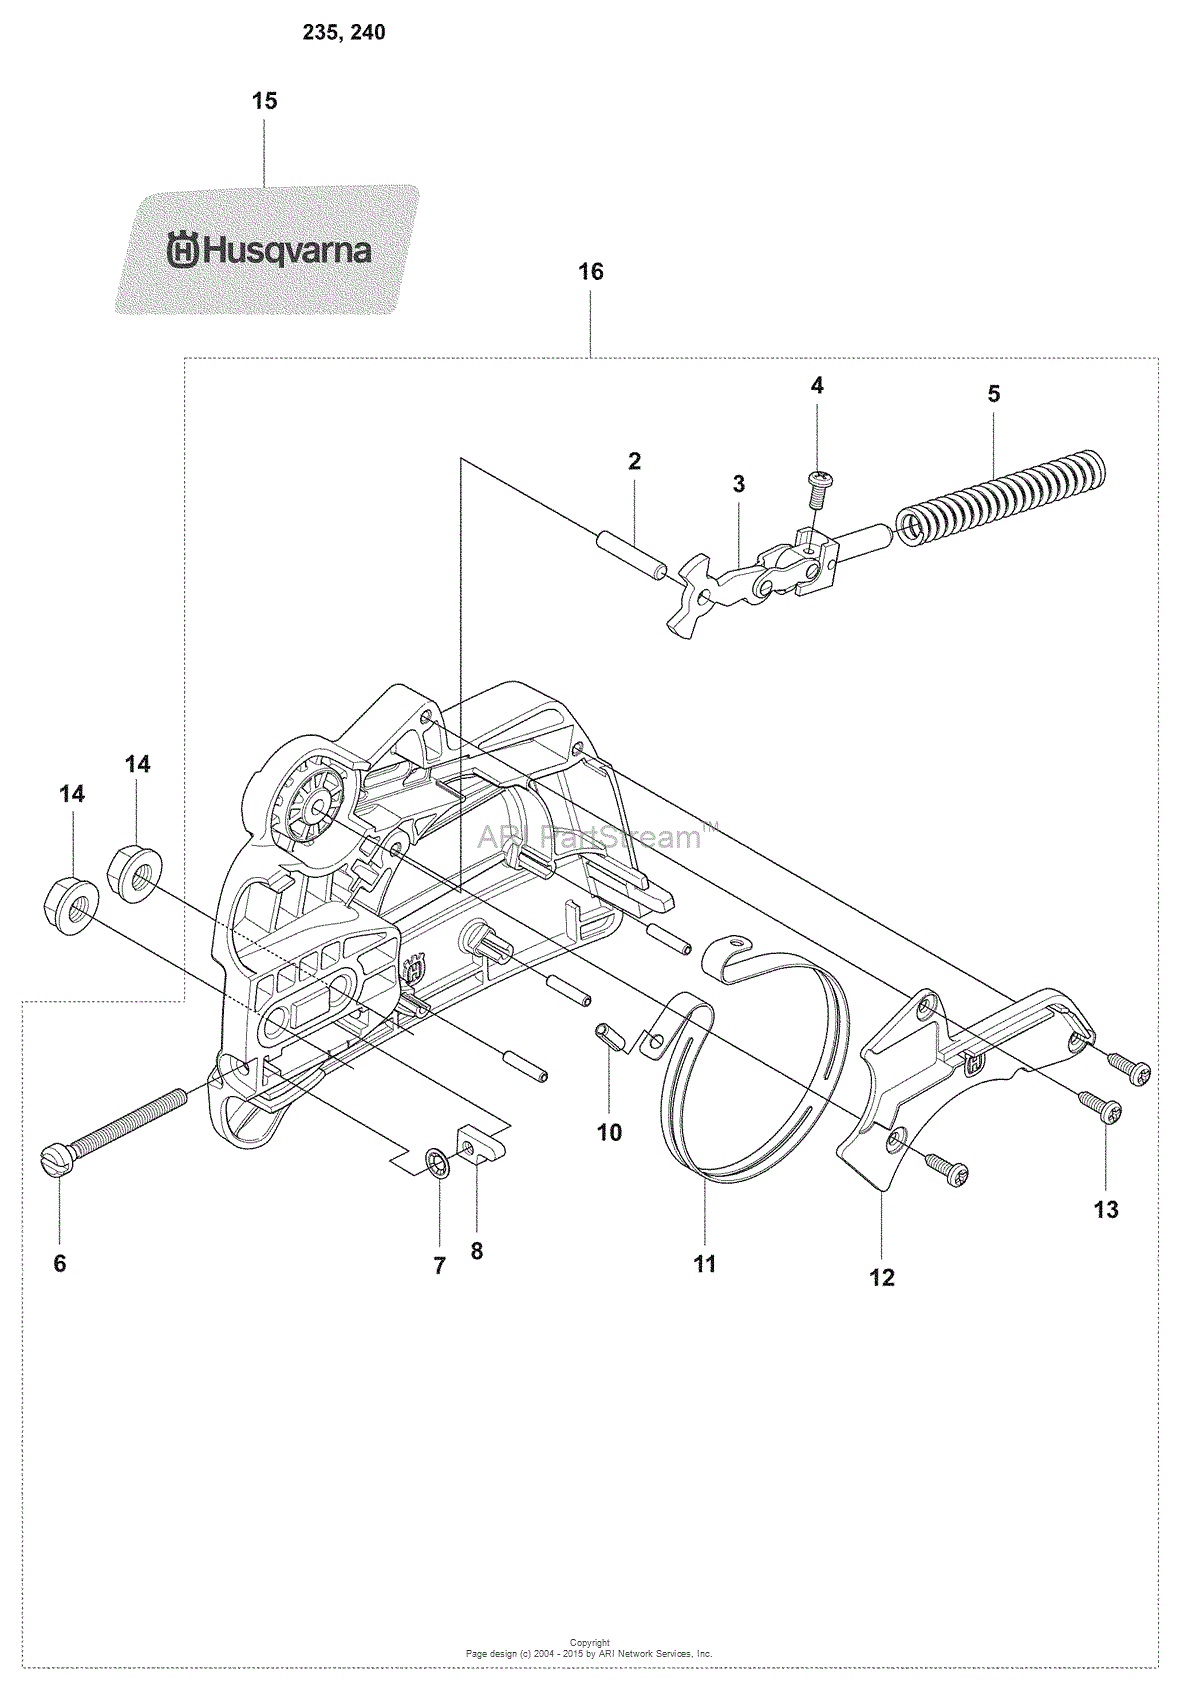 Husqvarna 240 (2008-01) Parts Diagram for Chainbrake